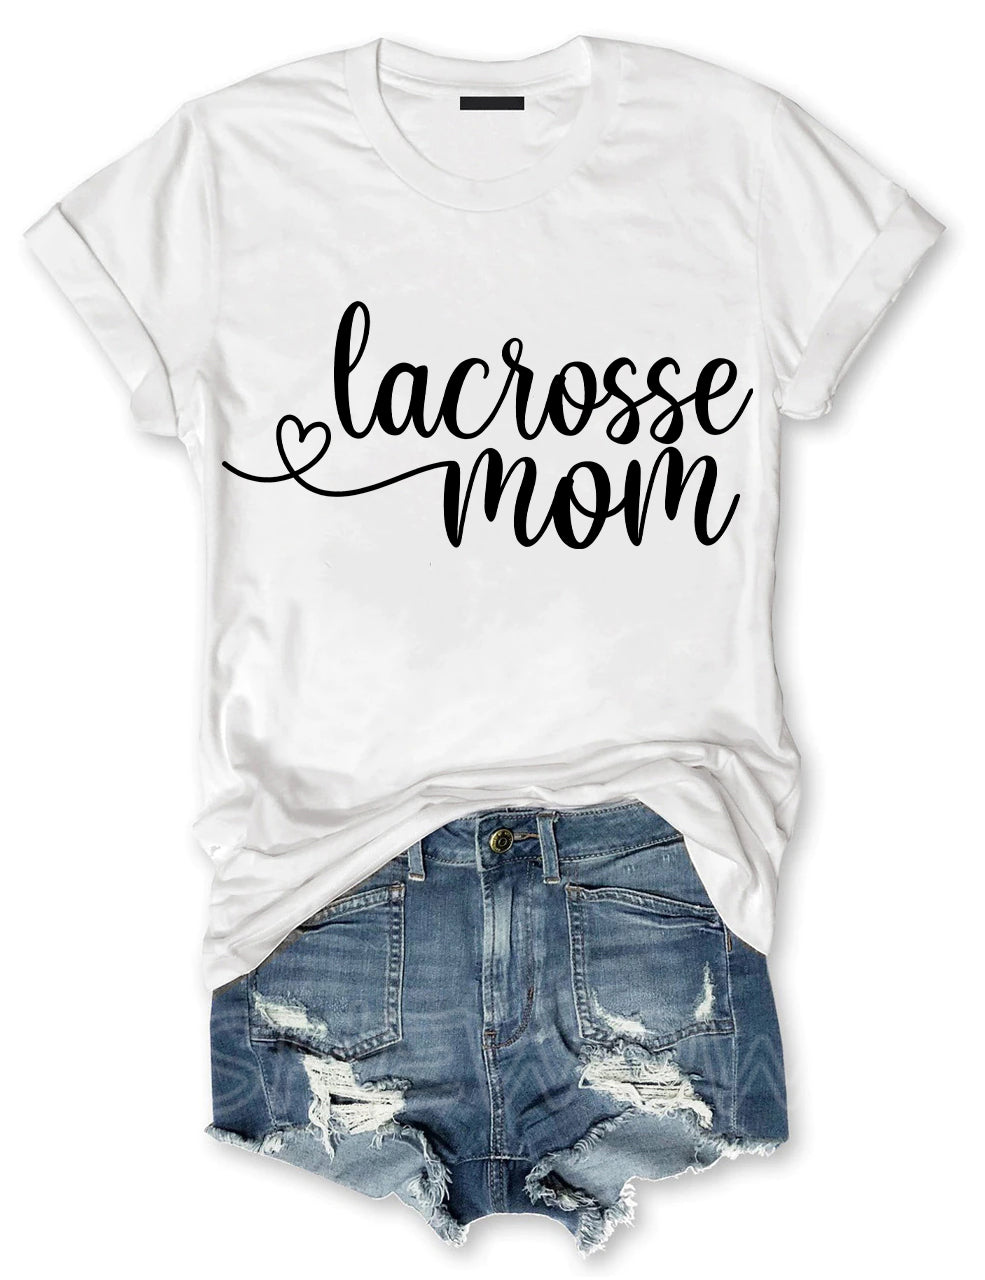 Lacrosse mom T-shirt